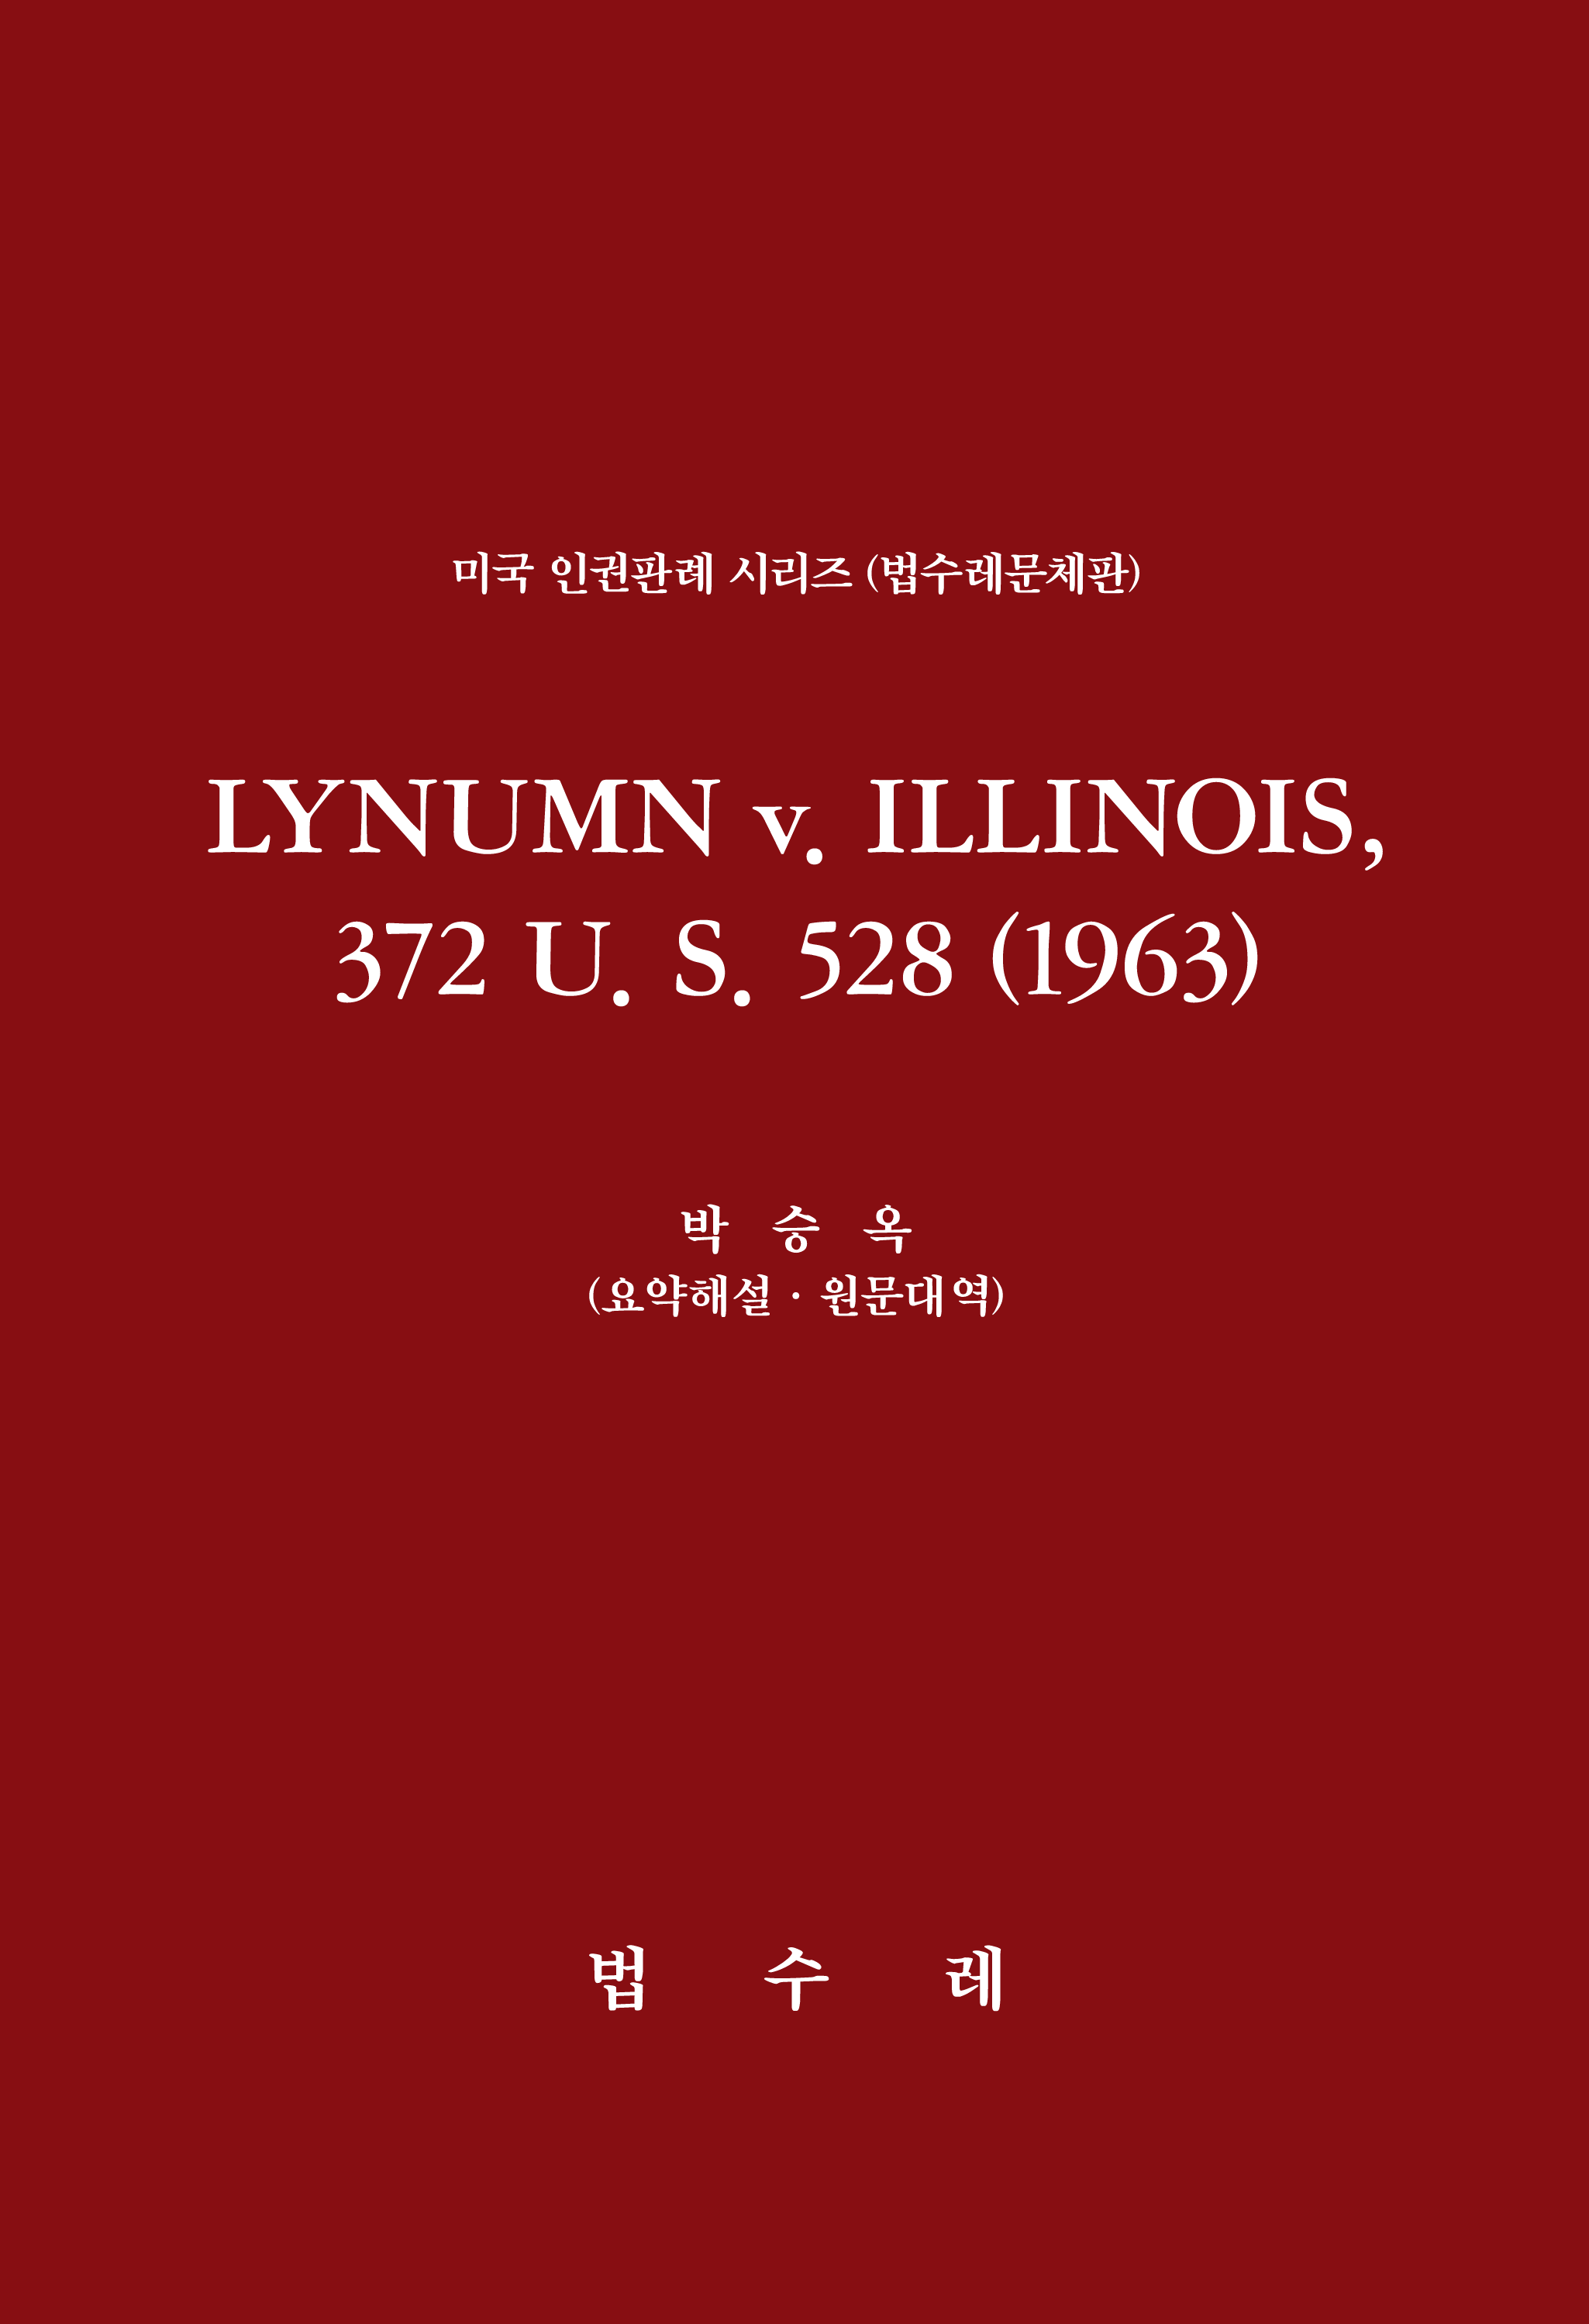 LYNUMN v. ILLINOIS, 372 U. S. 528 (1963)